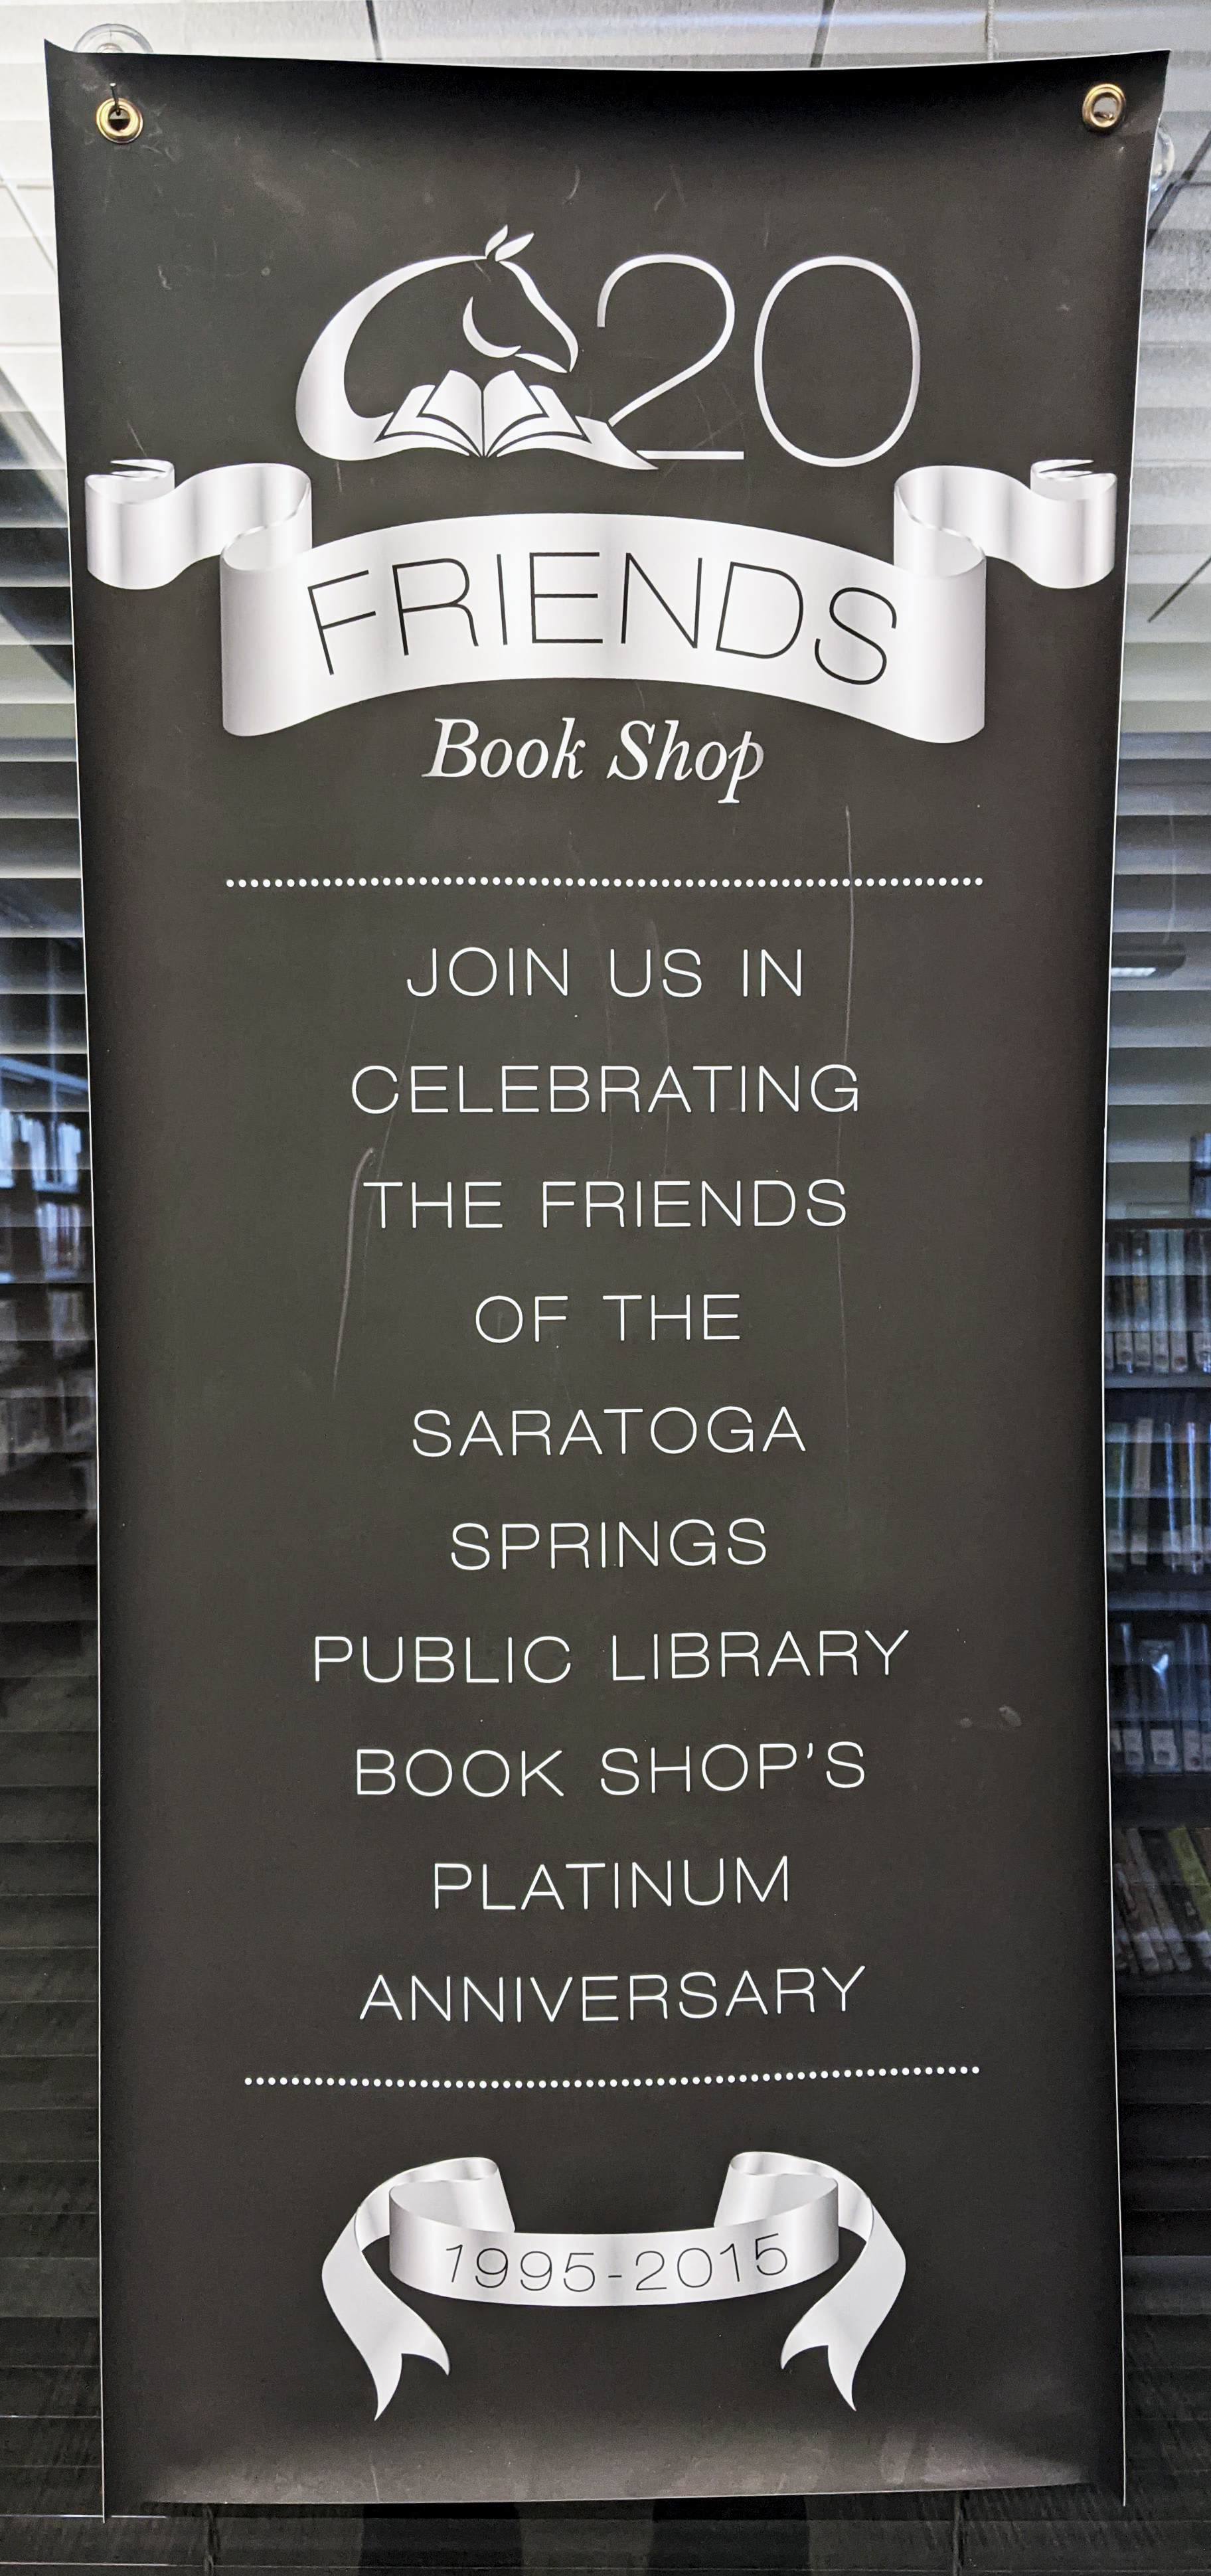 A banner celebrating the Friends’ Book Shop’s longtime service.